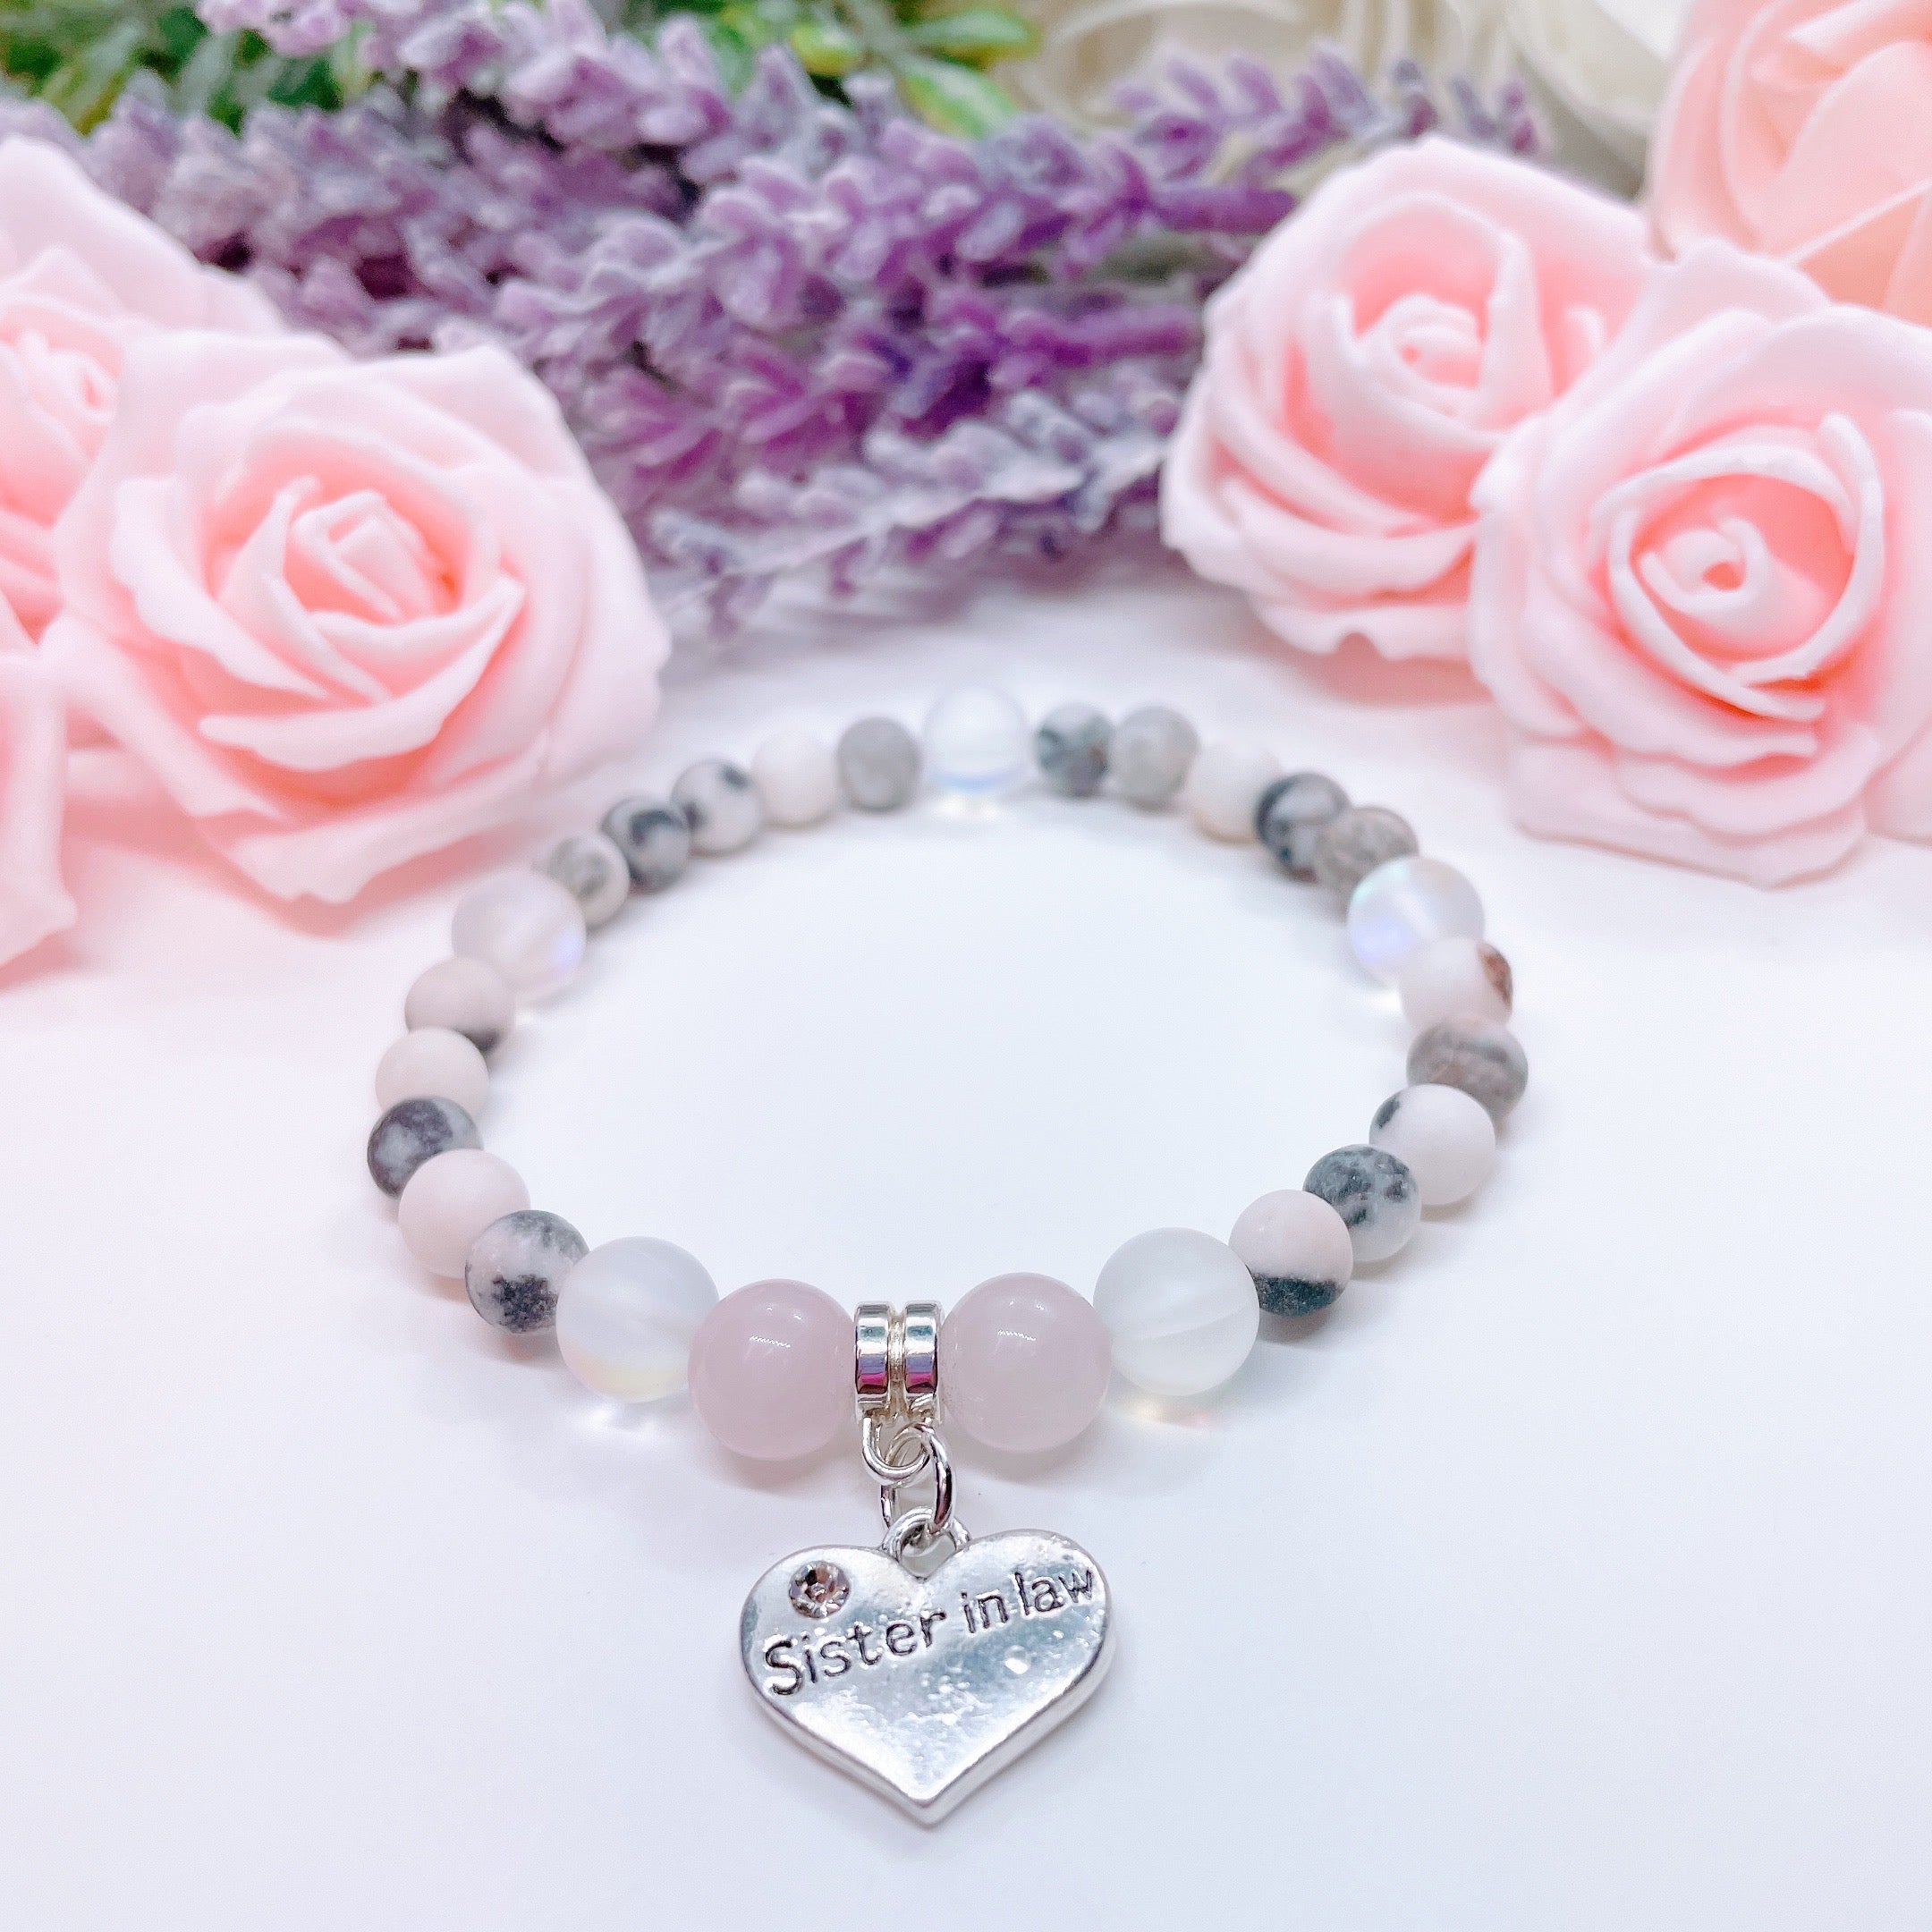 Sister-In-Law Heart Companion Charm Bracelet Rose Quartz